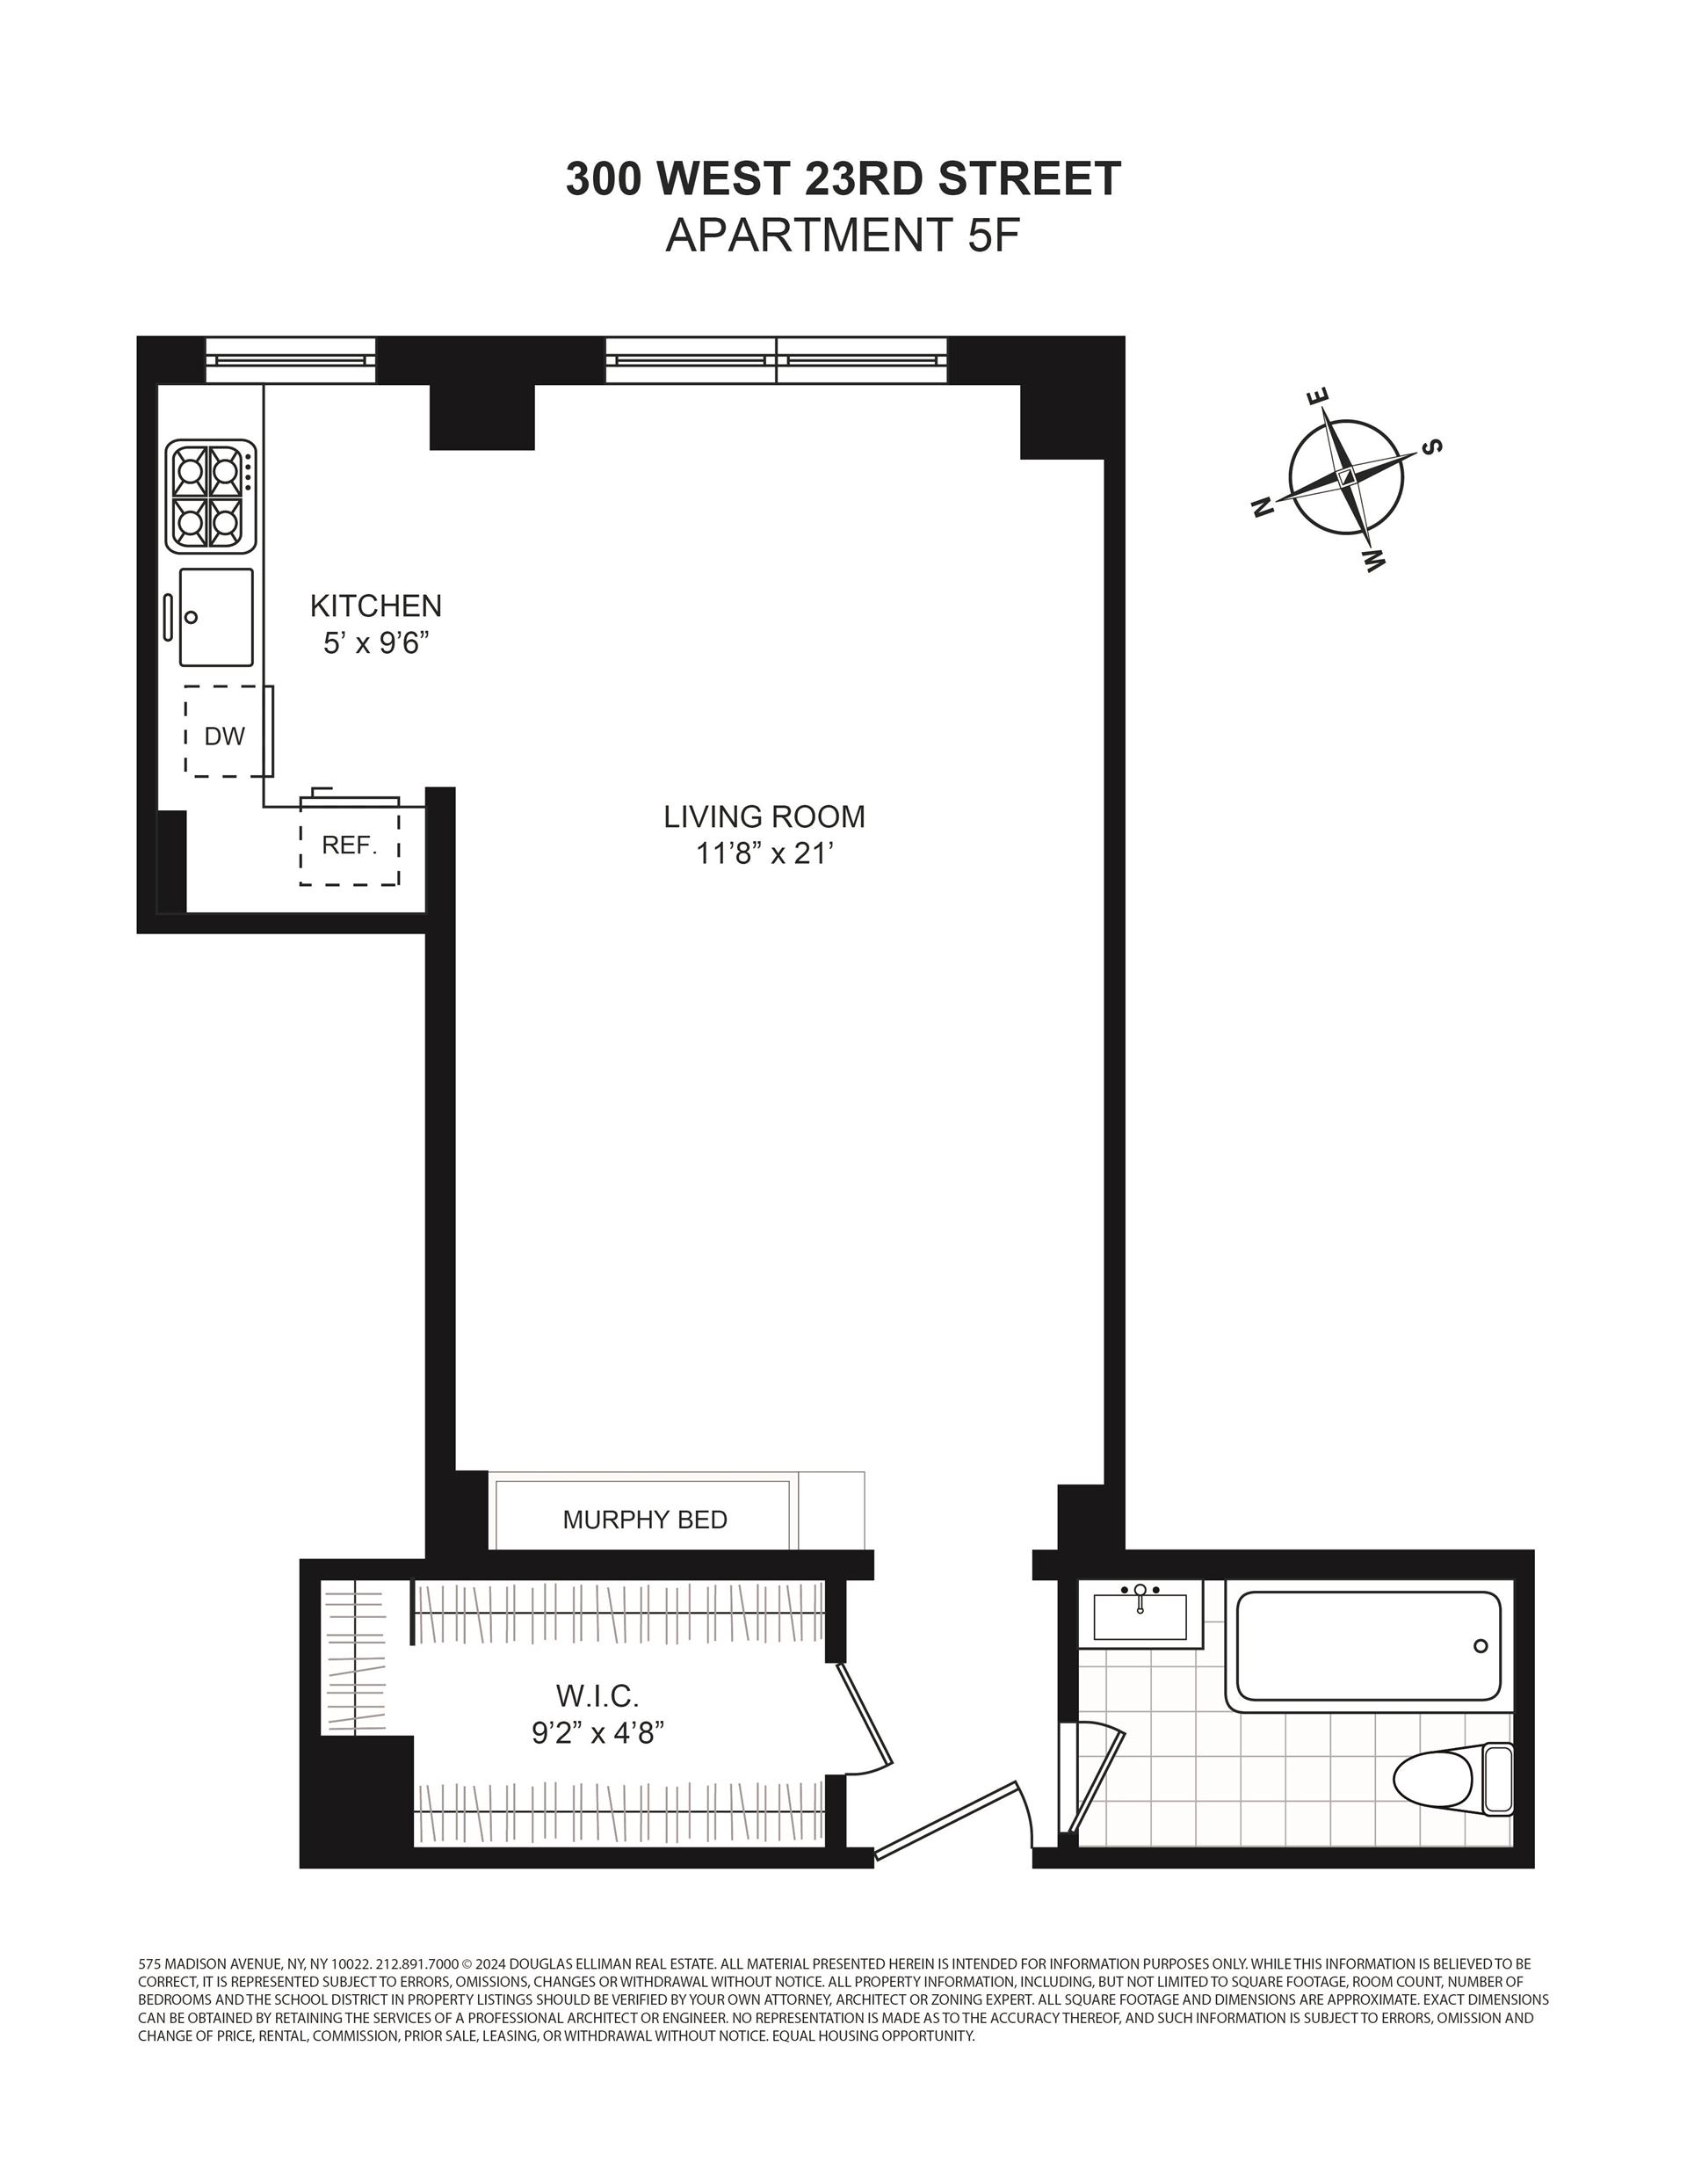 Floorplan for 300 West 23rd Street, 5F